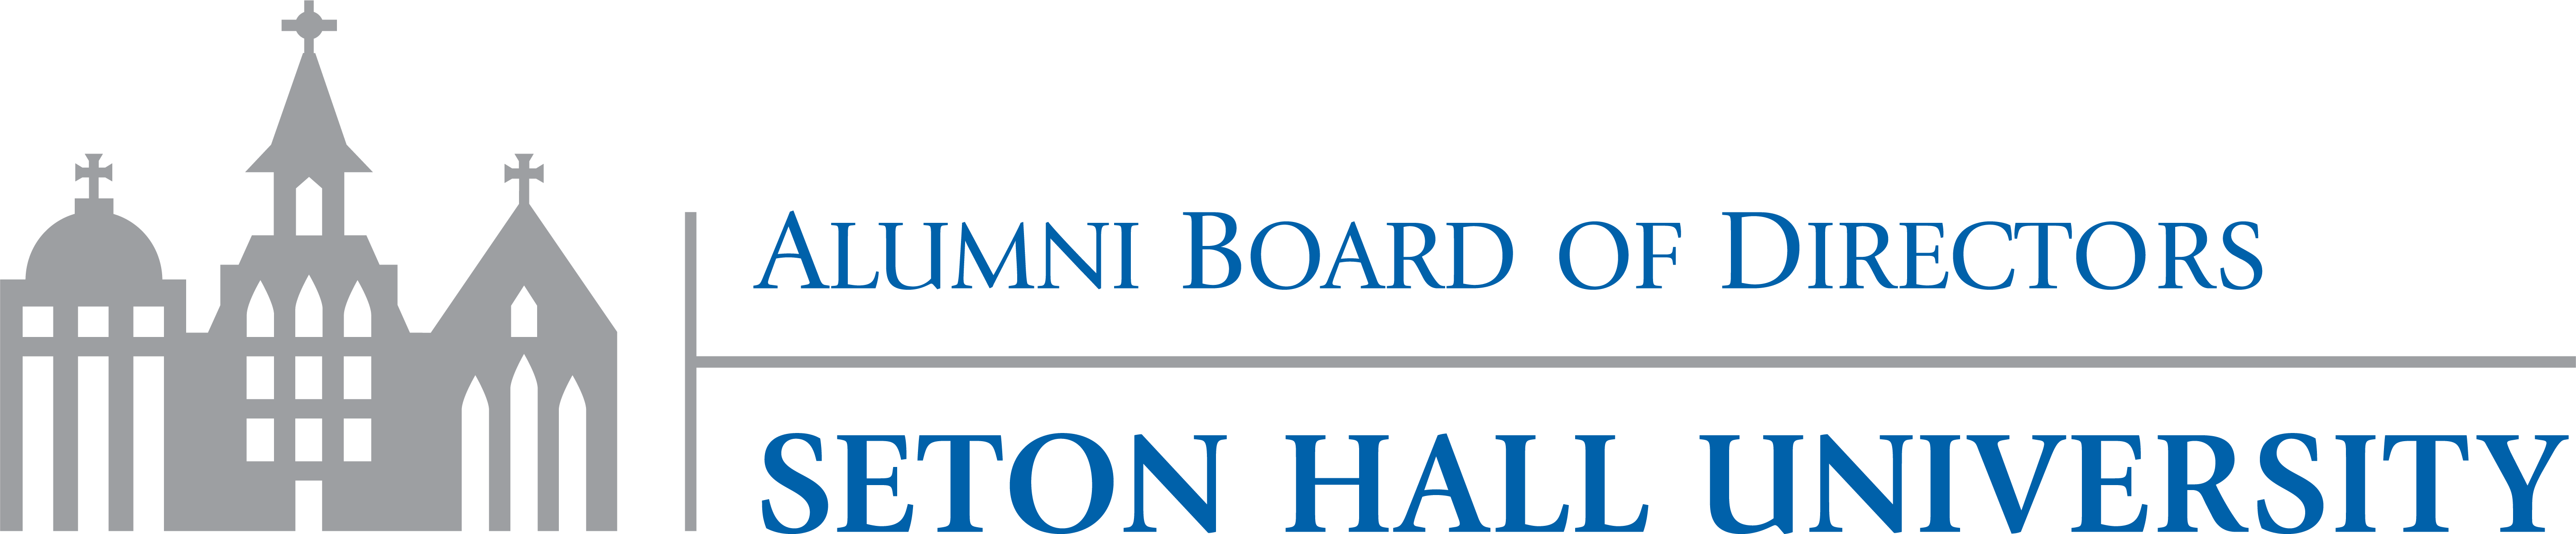 Alumni Board of Directors